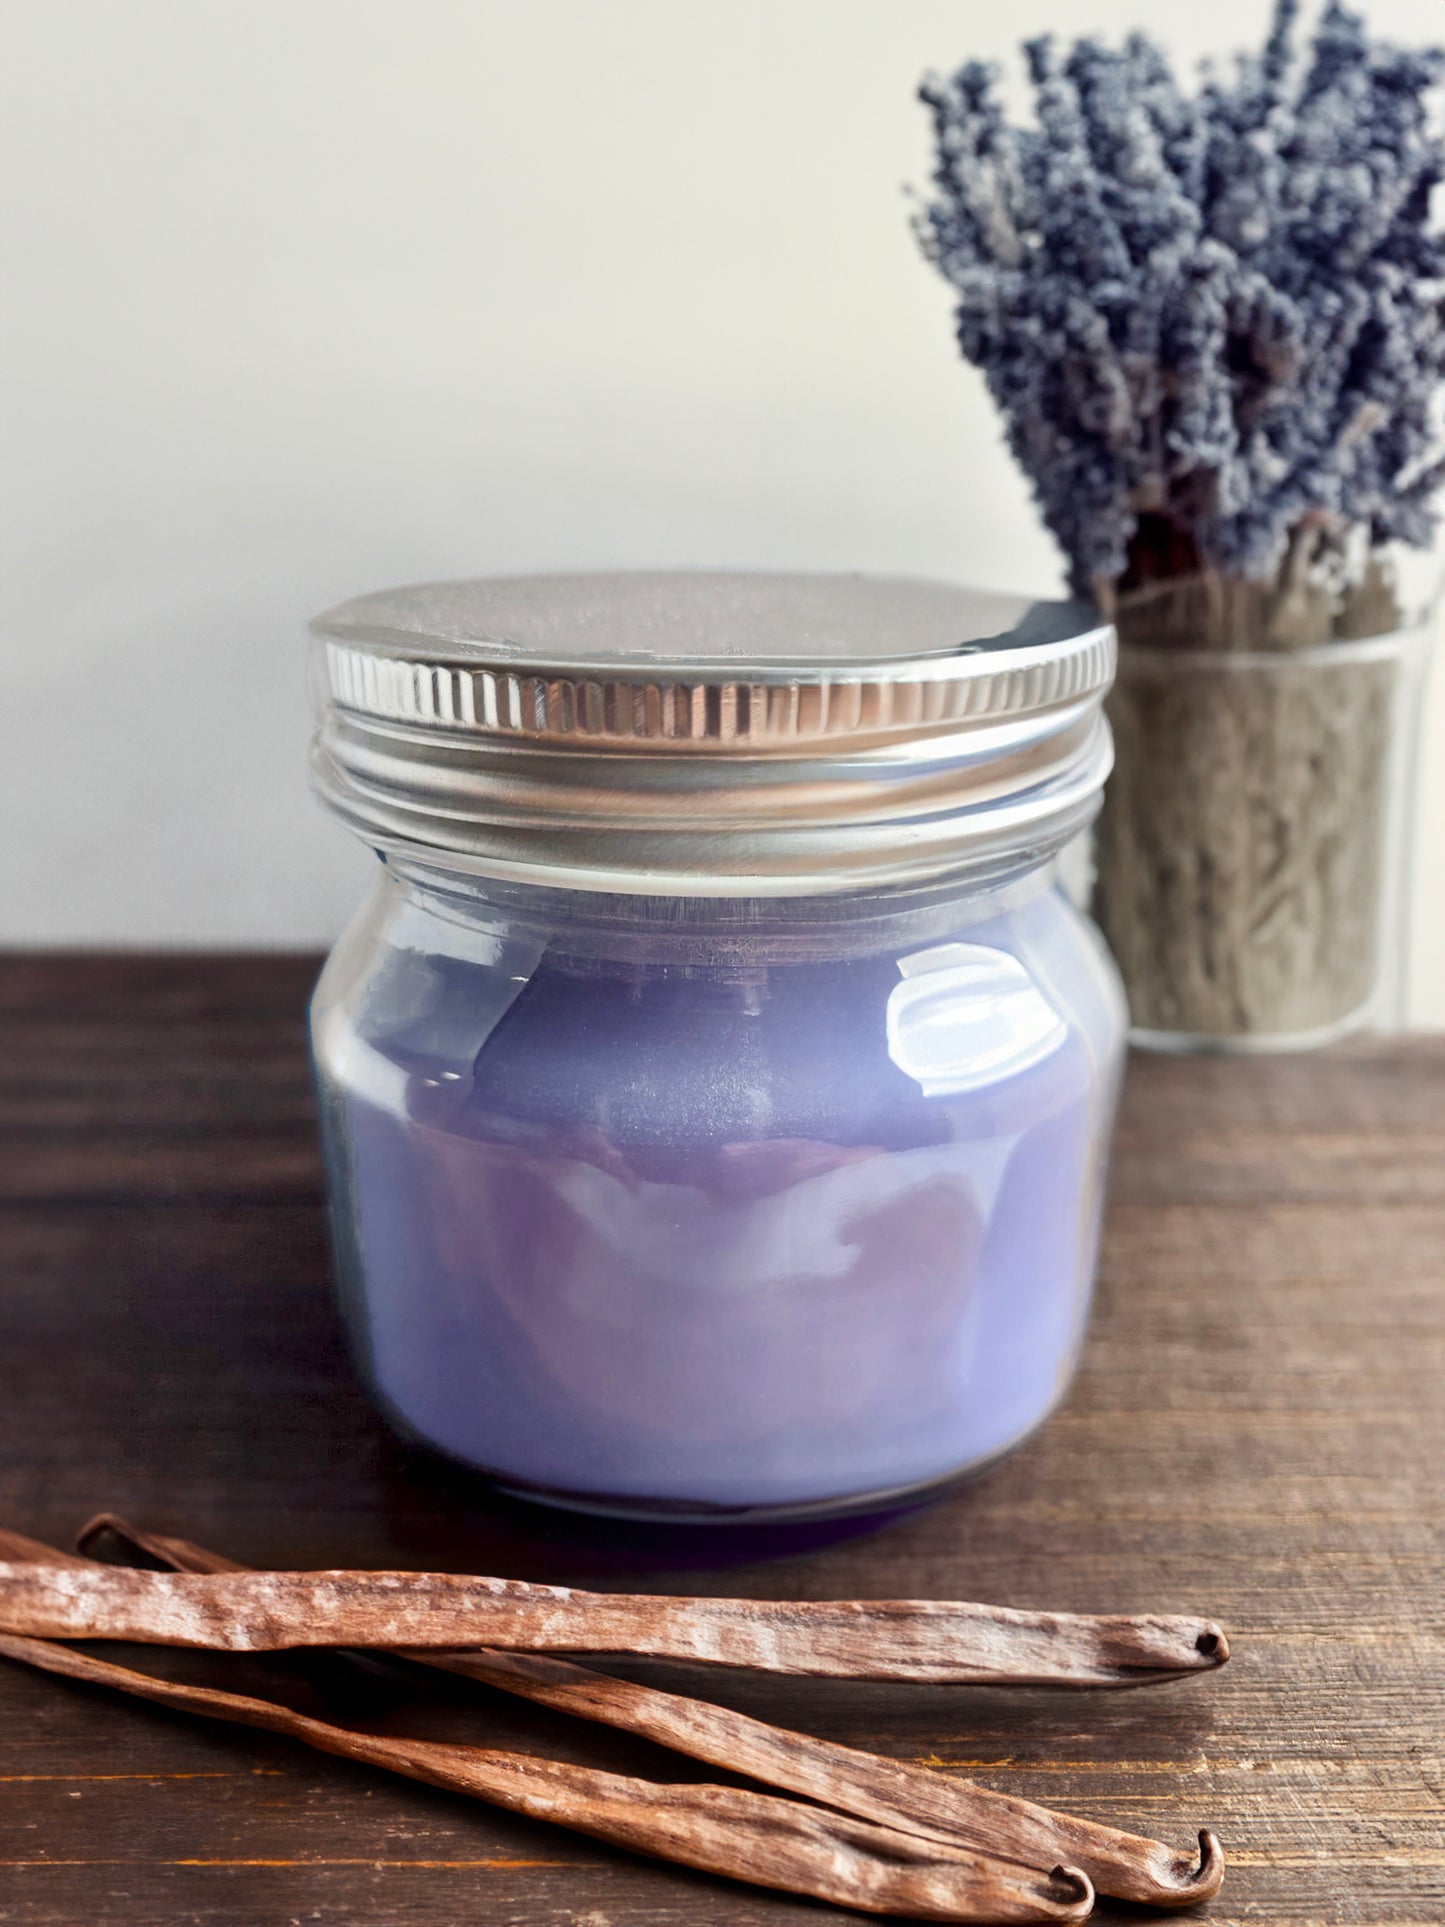 Candle | Vanilla Lavender